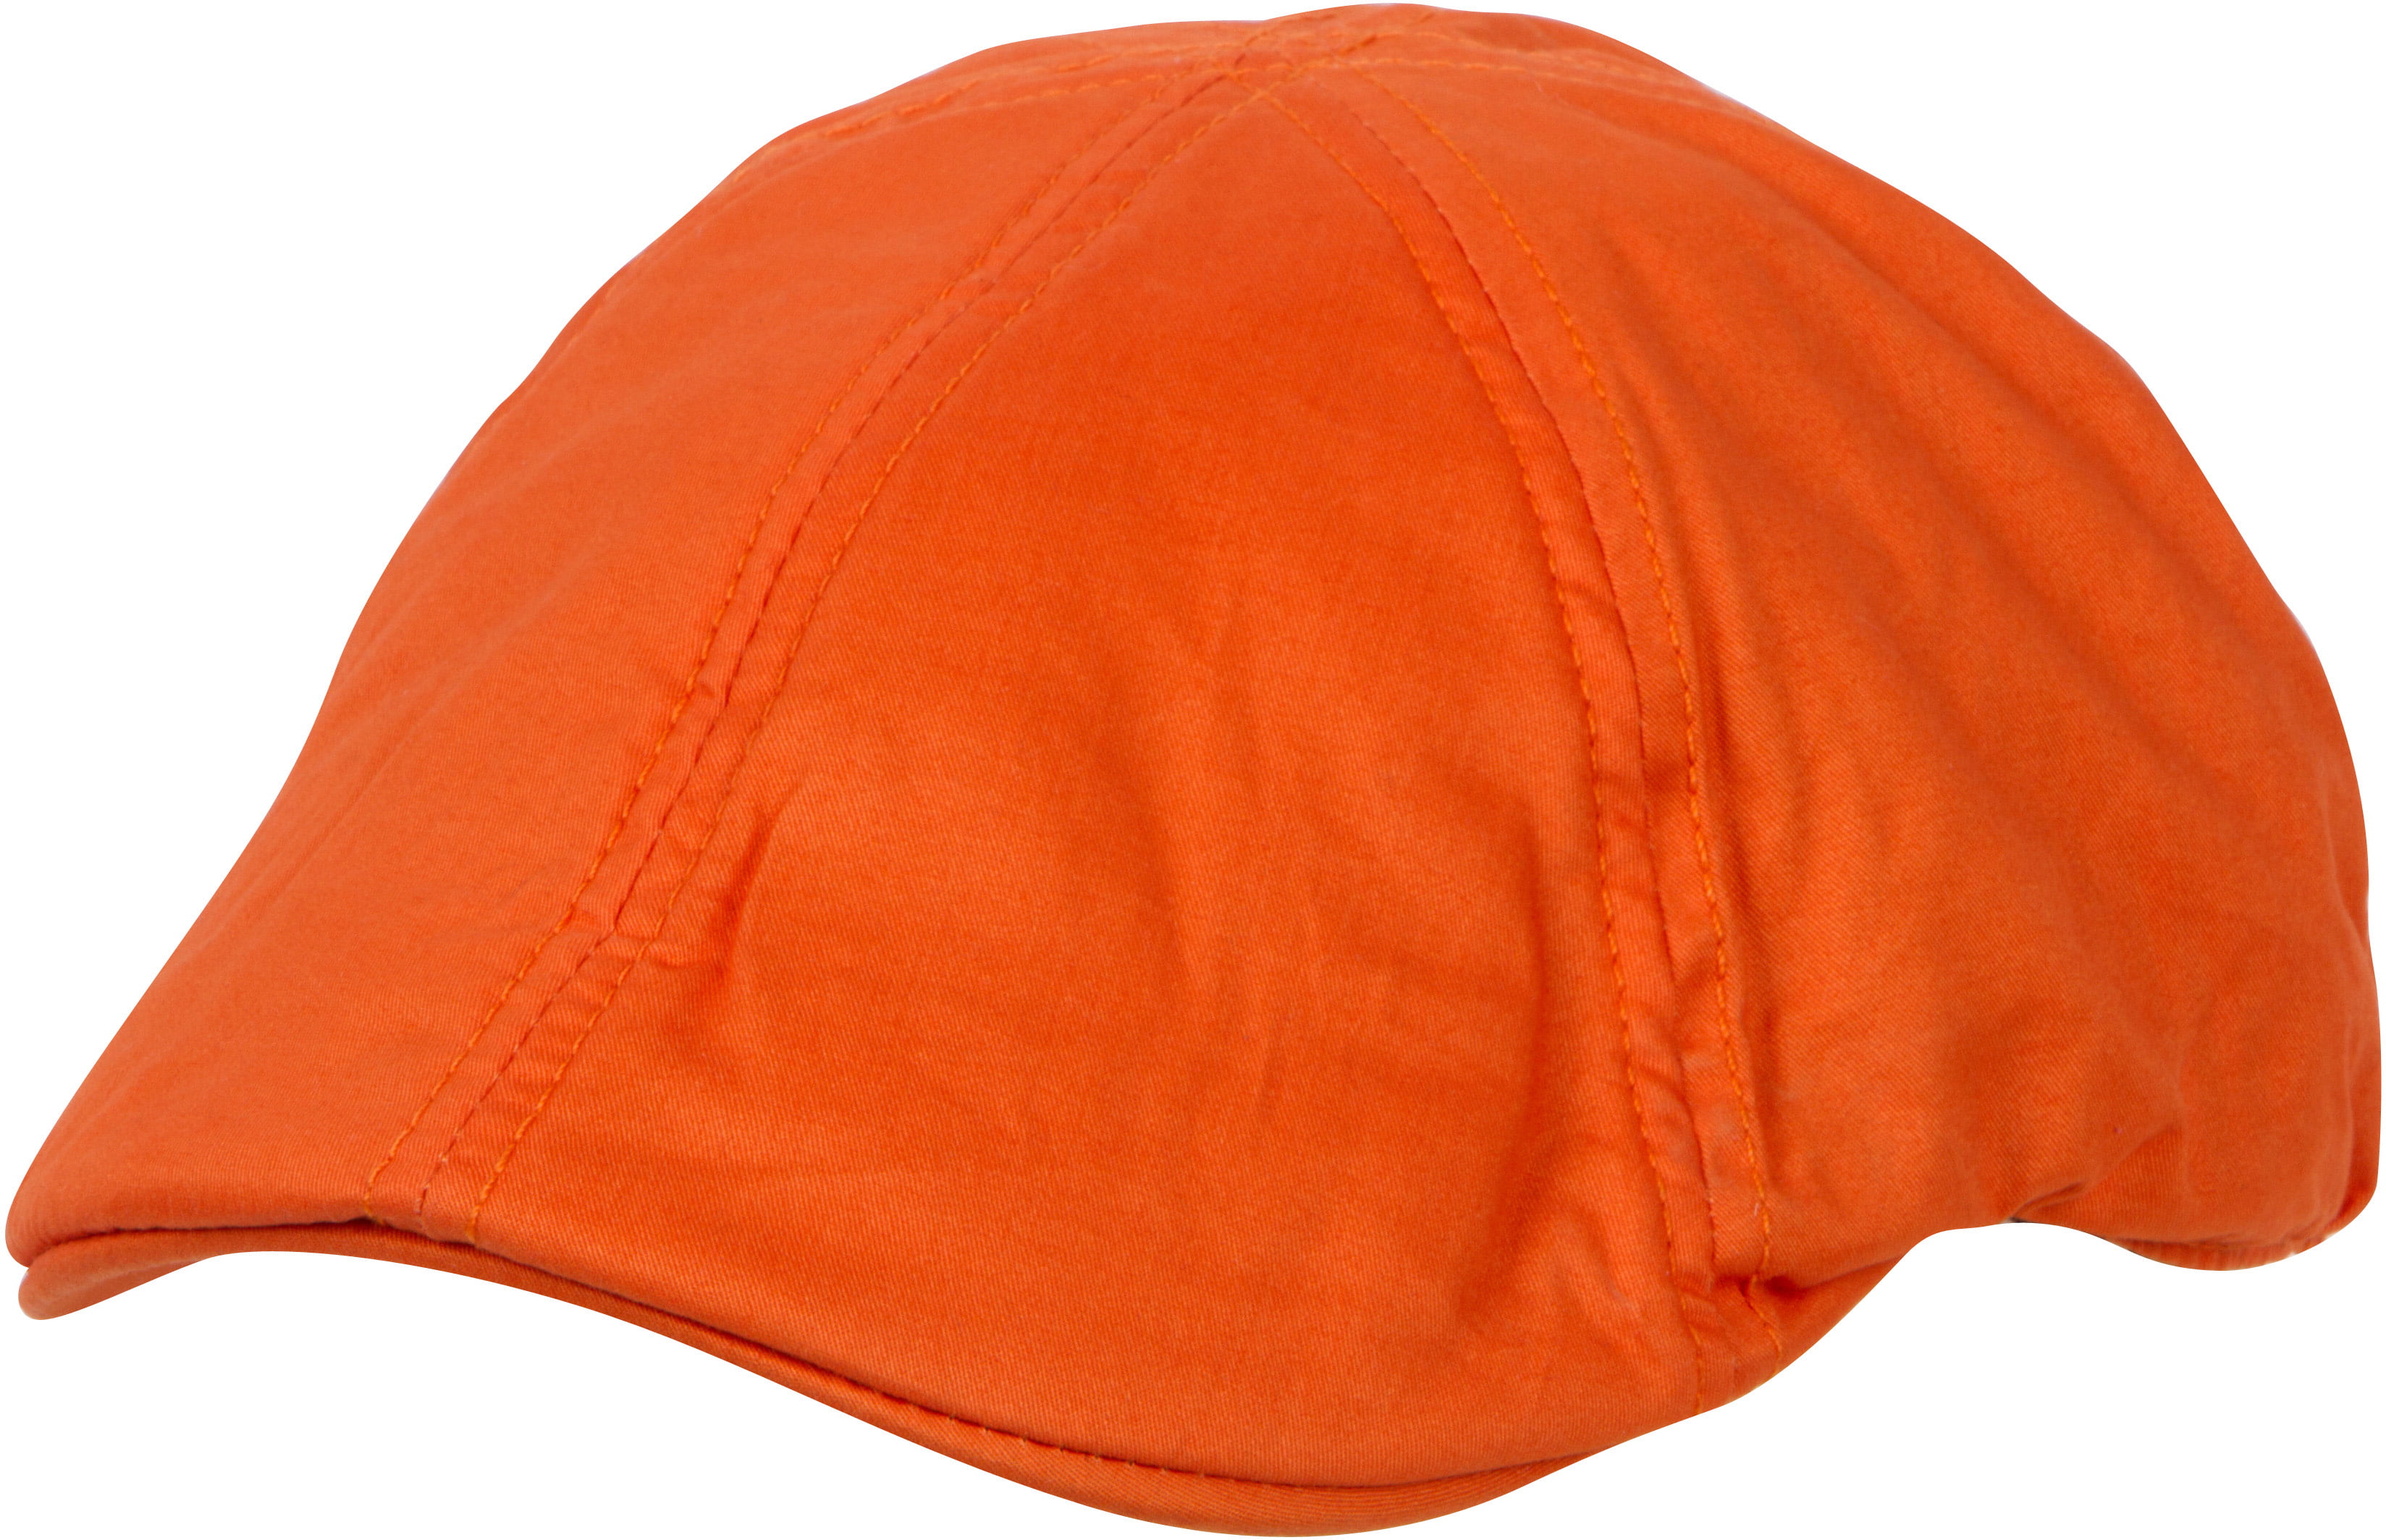 Sakkas Everyday Essentials Newsboy Ivy Flat Cap - Orange - One Size ...